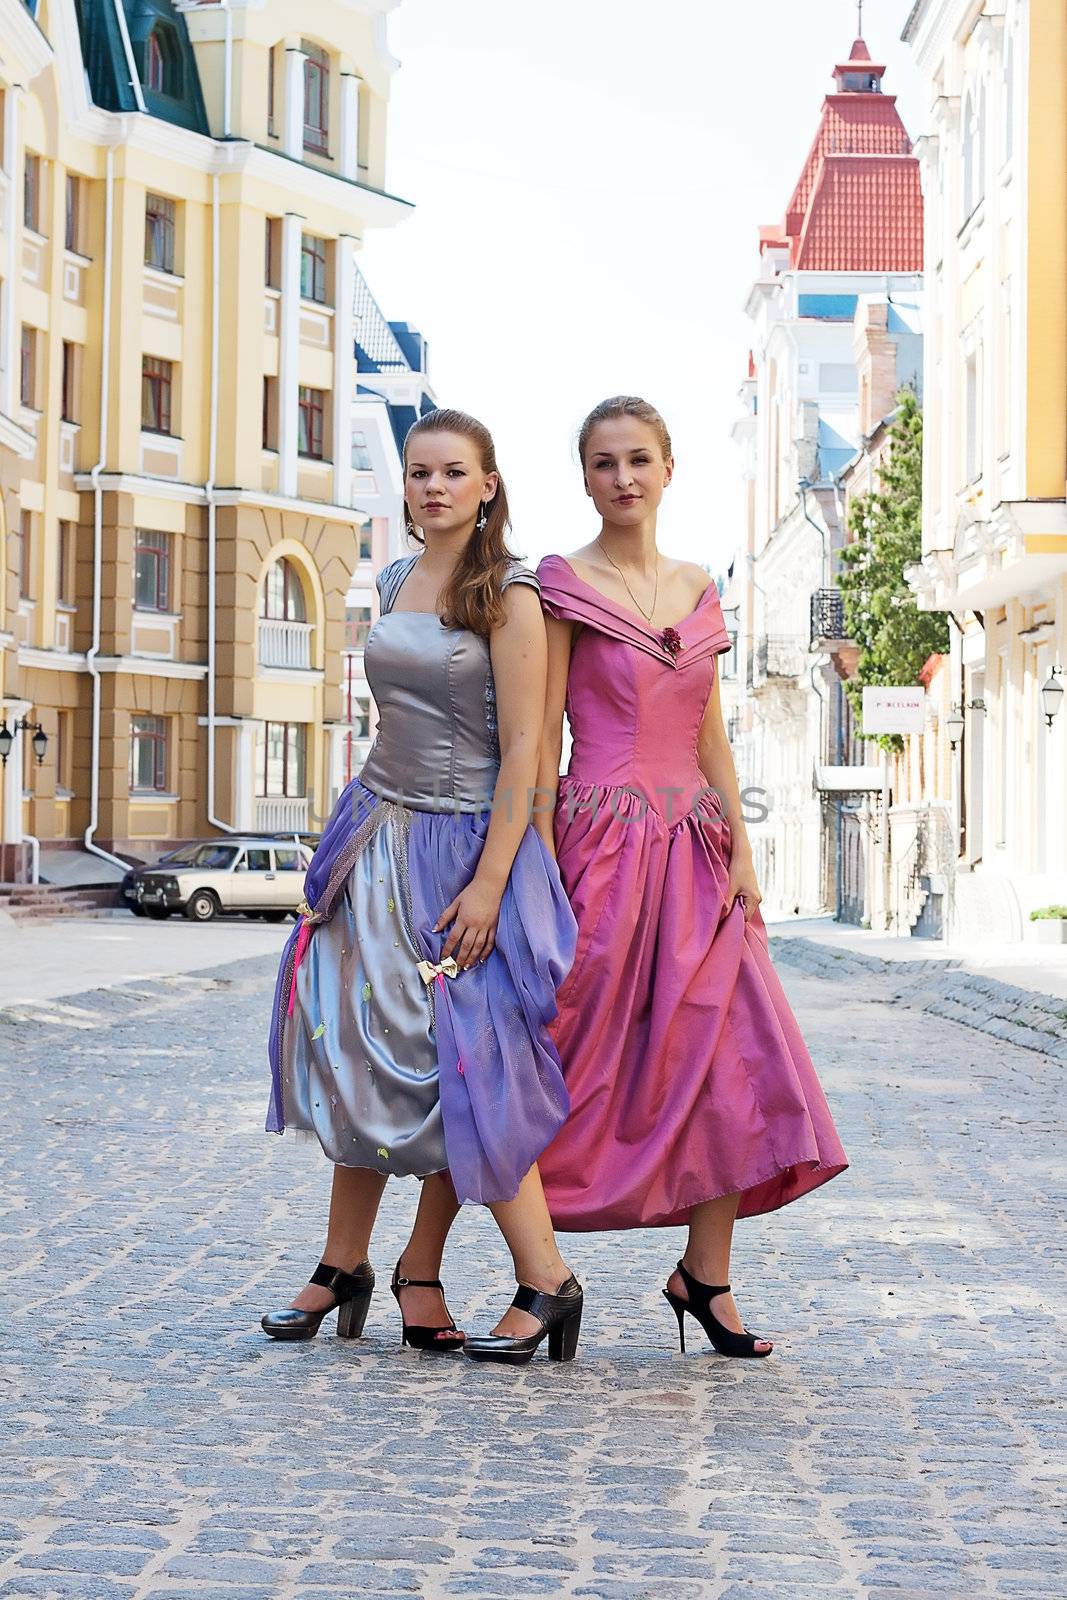 Two girls in dresses in the city, Kiev, Ukraine